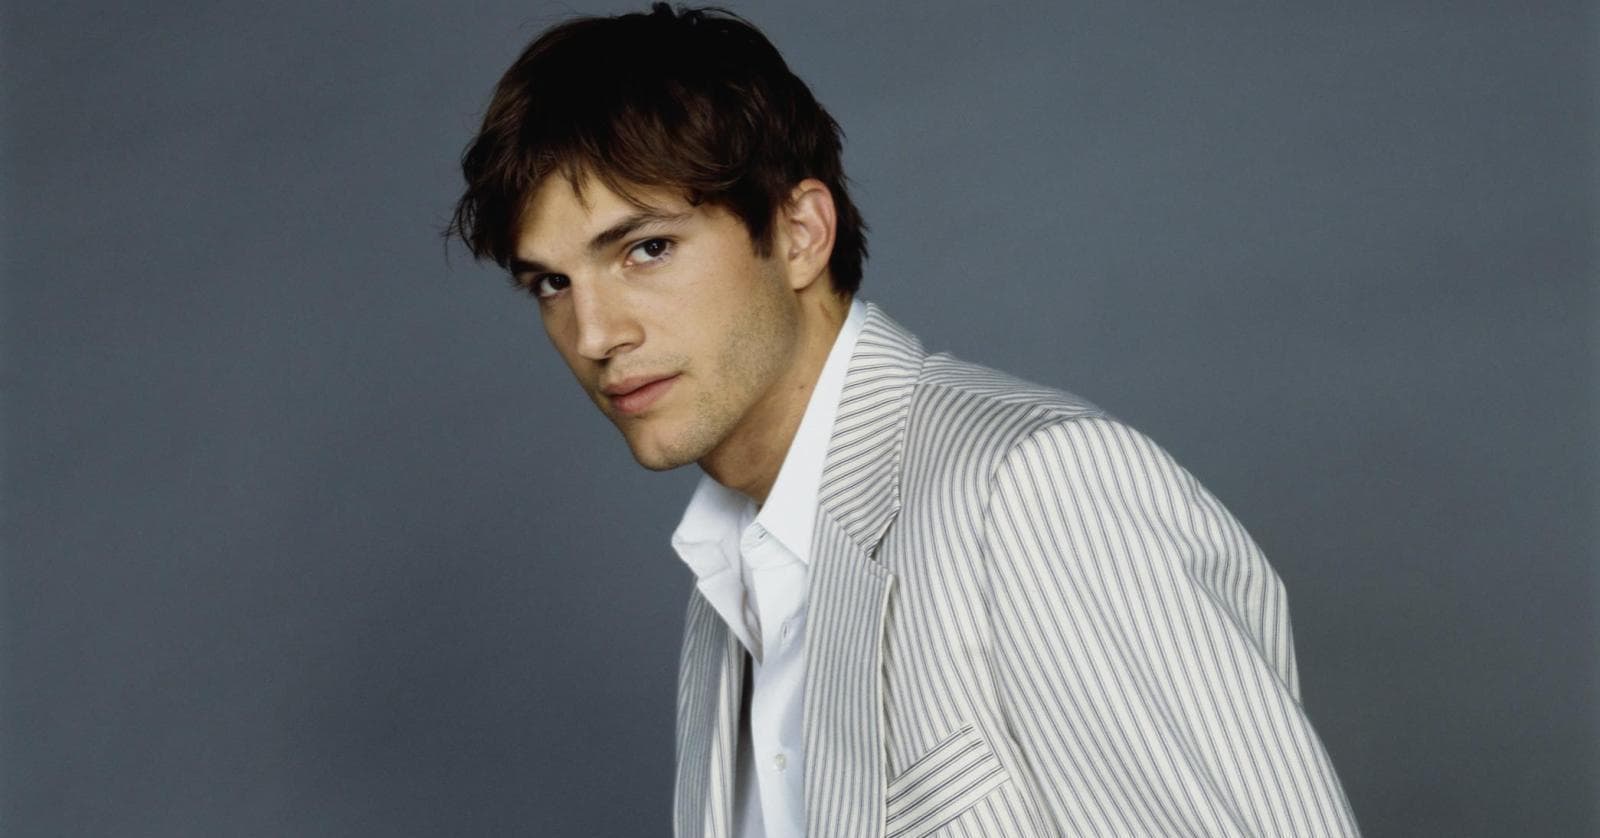 Ashton Kutcher Wallpapers